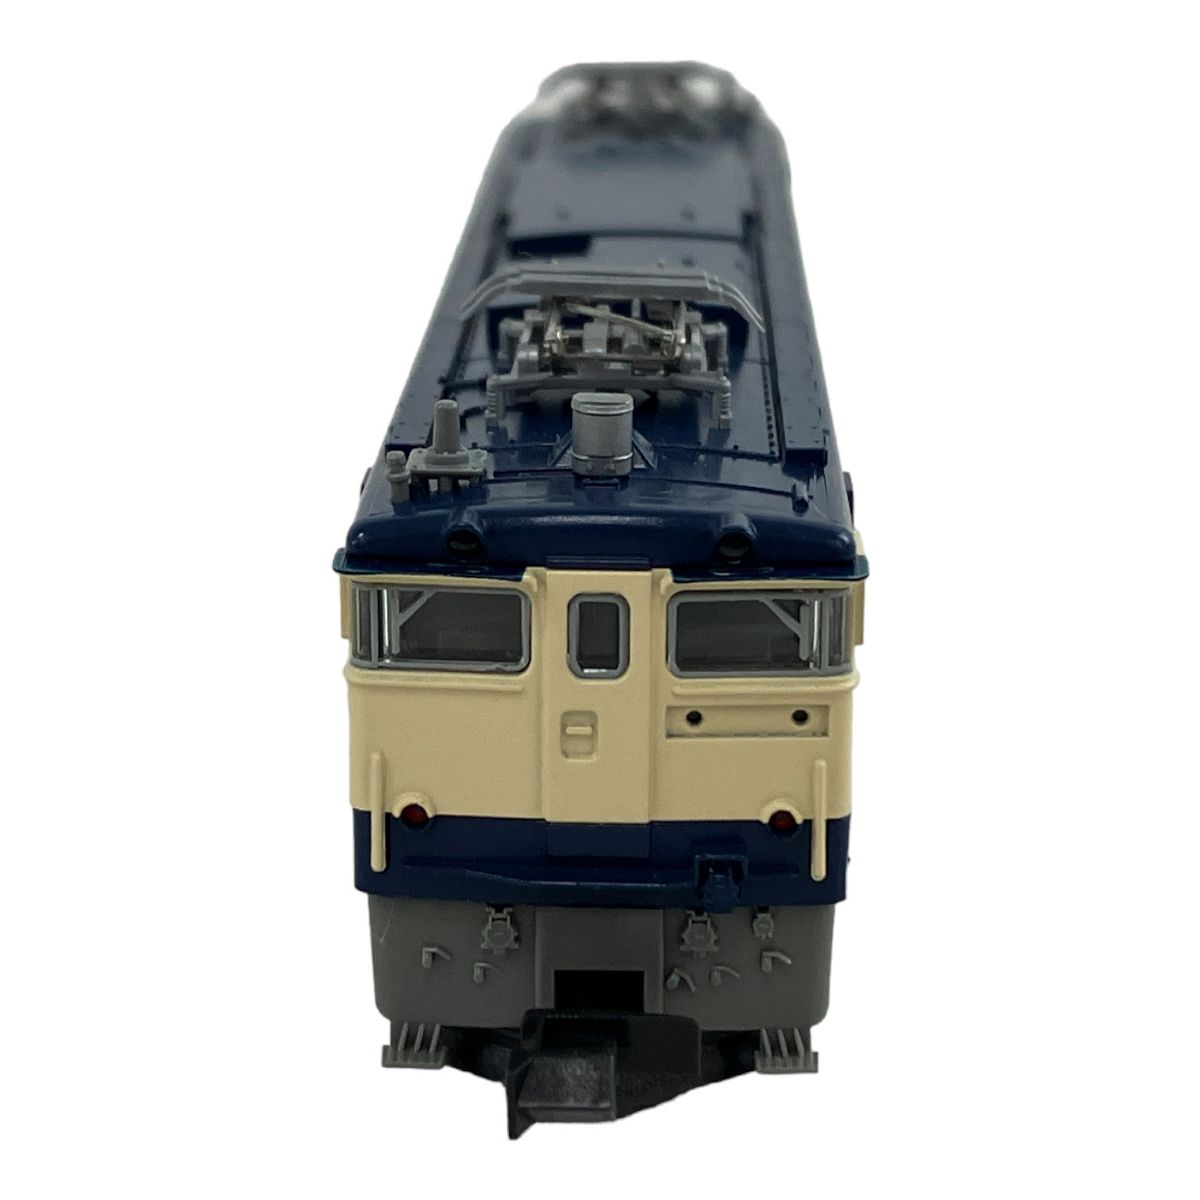 【動作保証】KATO 3019-1 EF65形 1000番台 電気機関車 Nゲージ 鉄道模型  N8959527